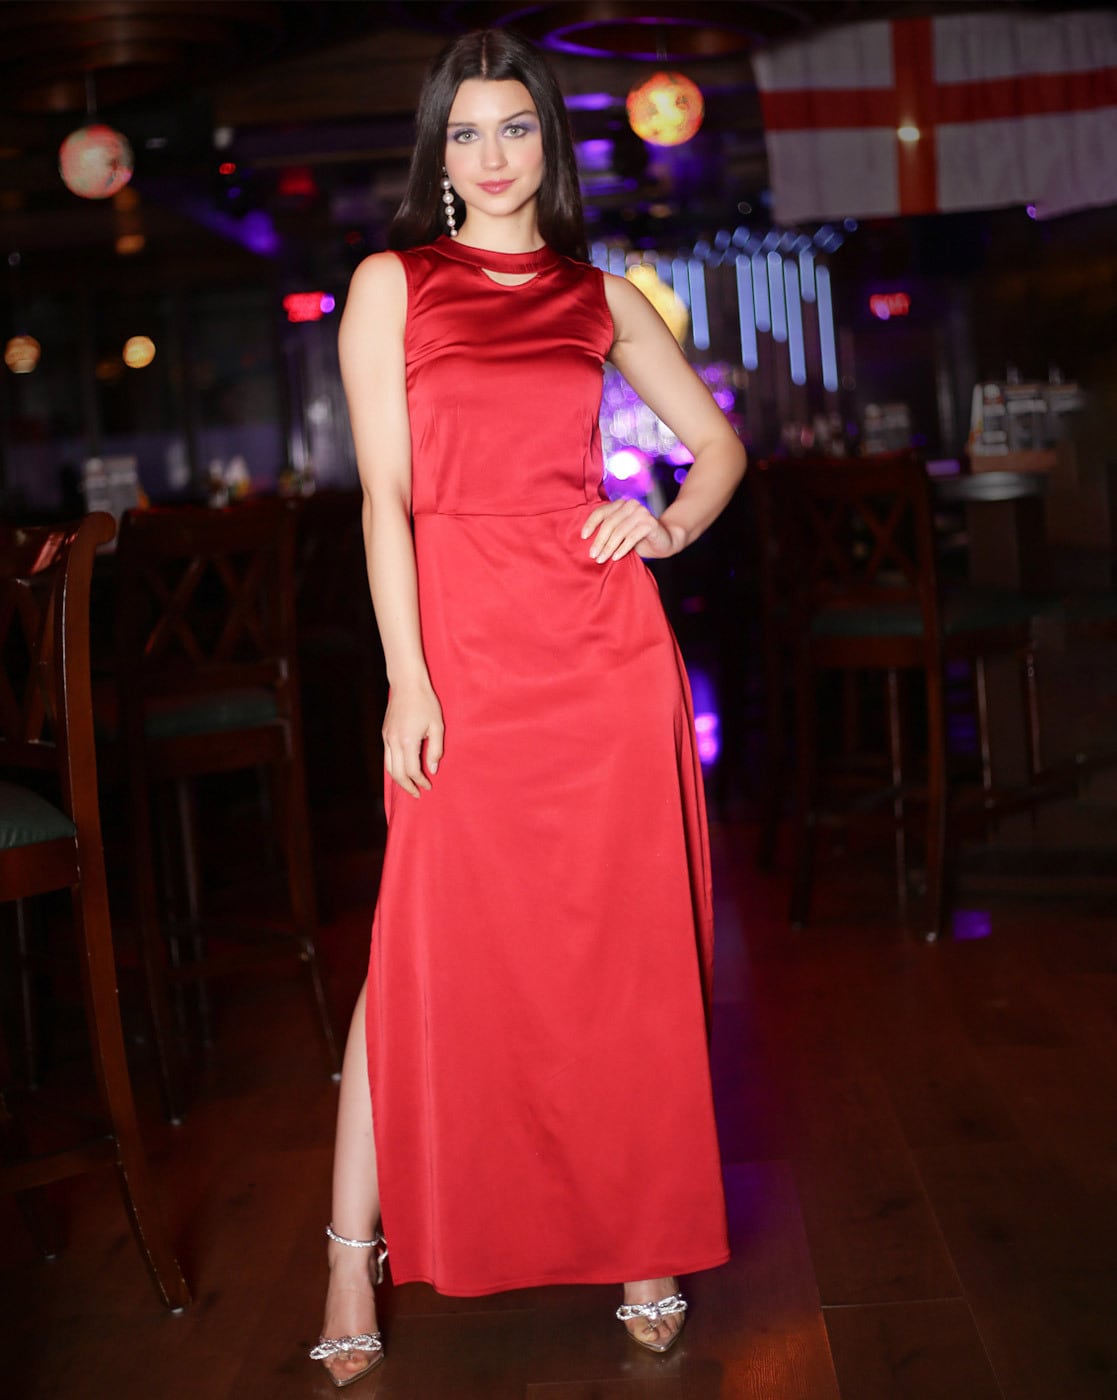 Red Cocktail Dresses,Strappy Cocktail Dress,Short Cocktail Dress,Simpl -  Wishingdress